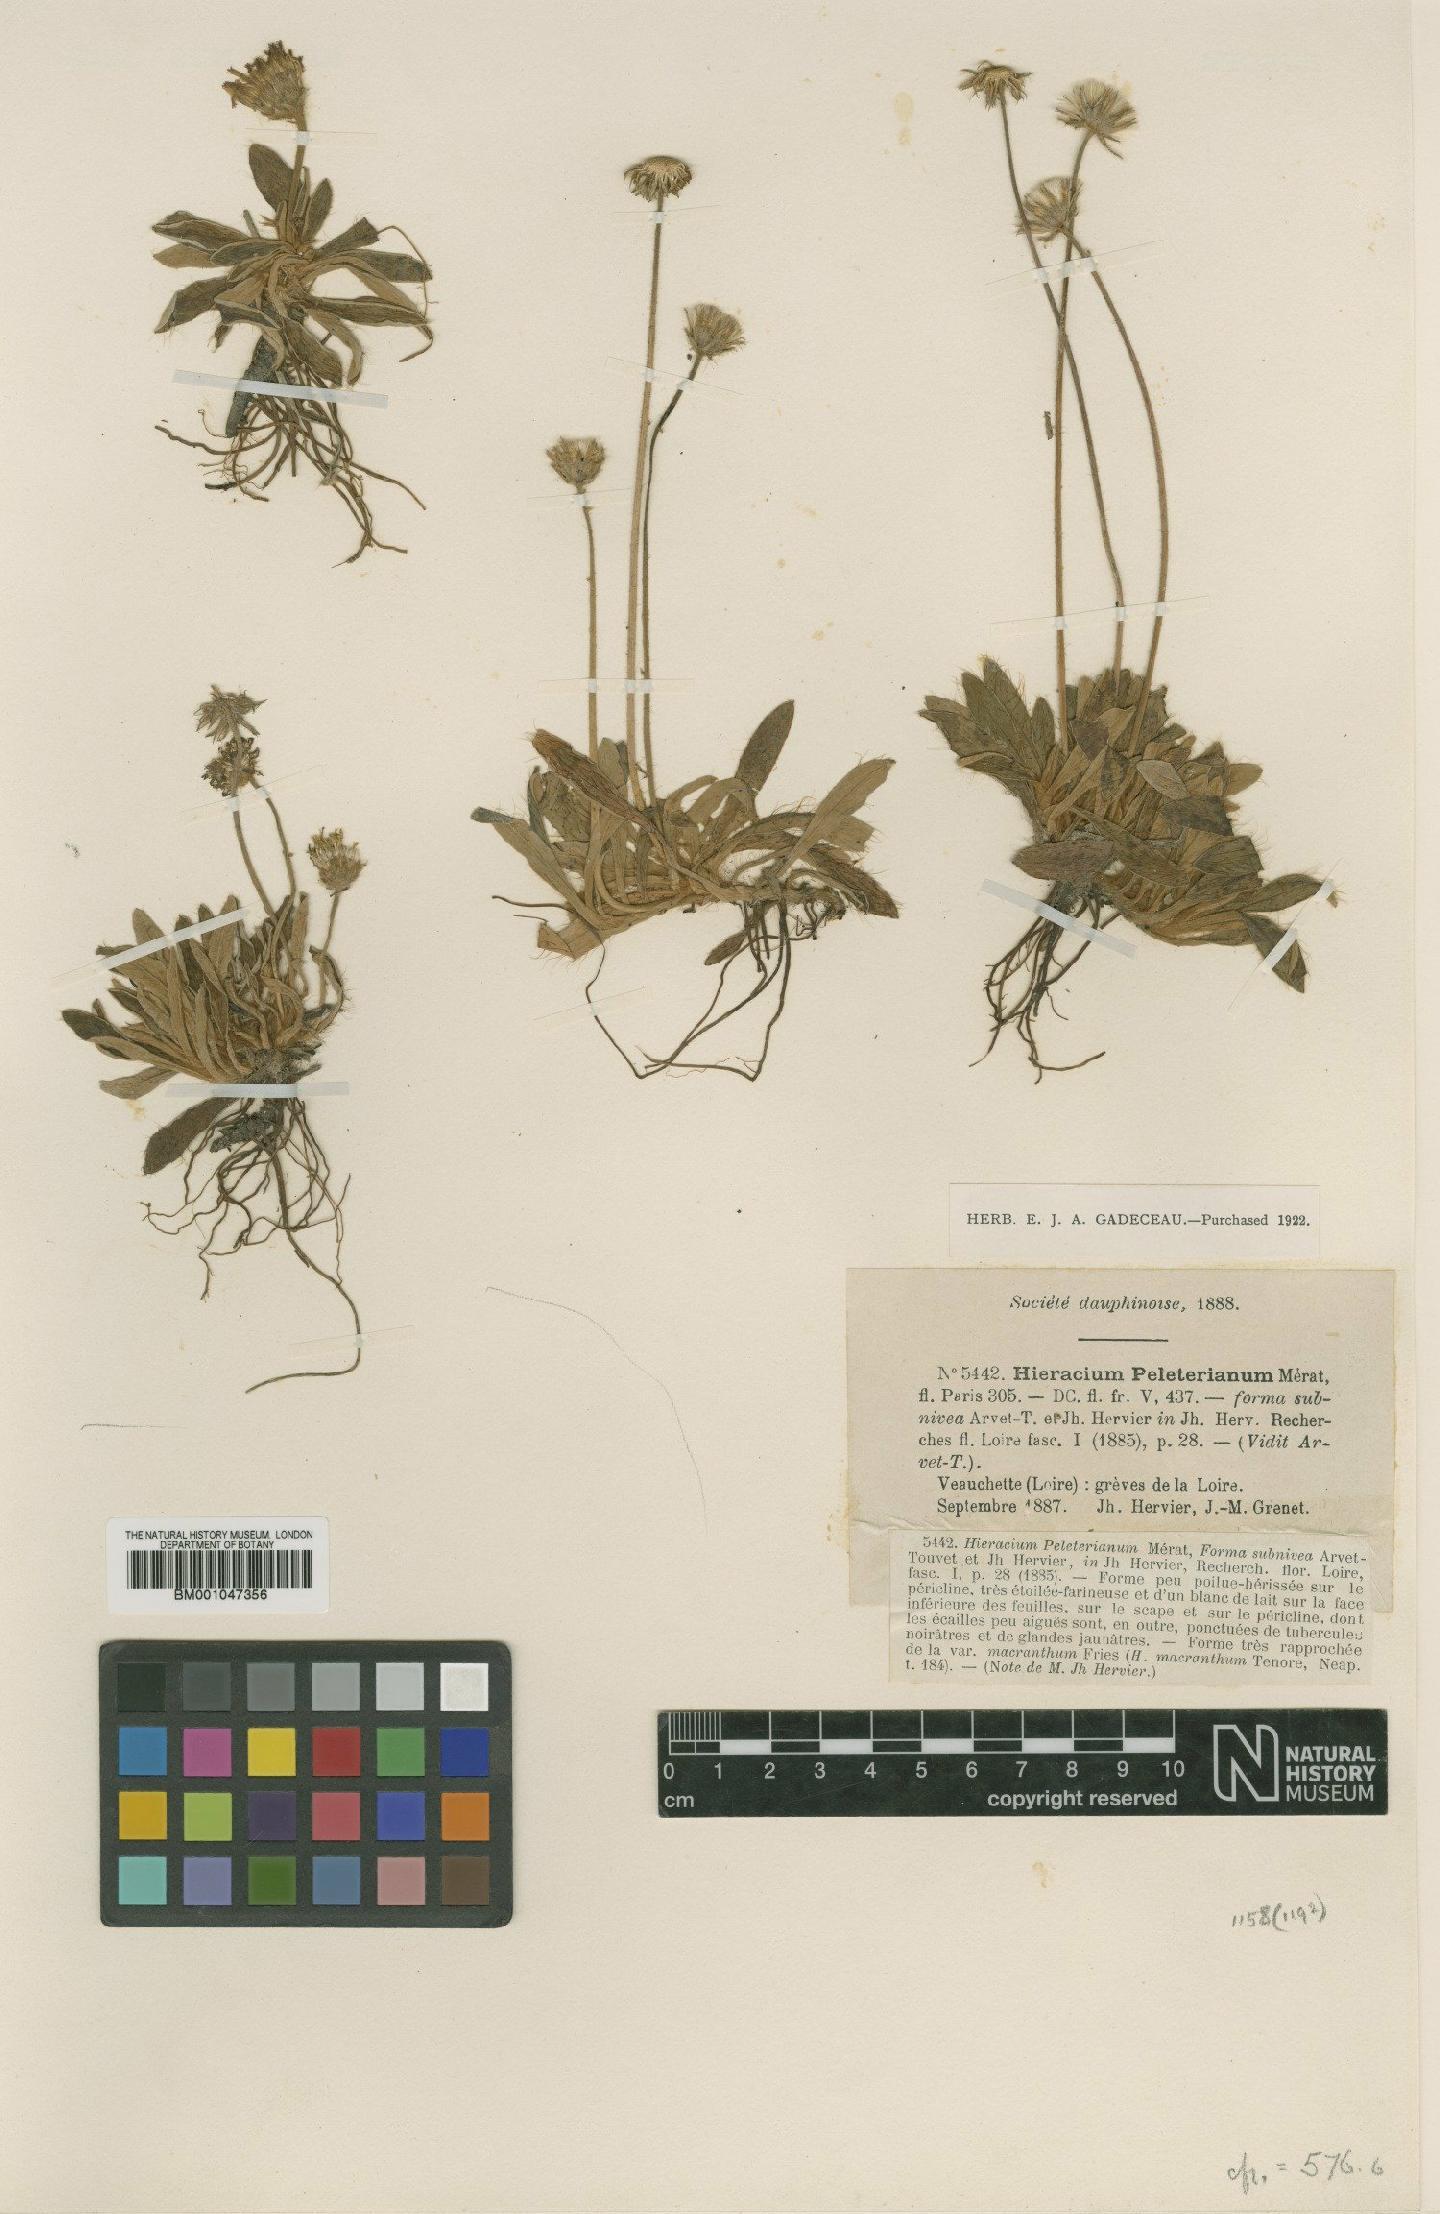 To NHMUK collection (Hieracium peleterianum subsp. ligericum Zahn; Type; NHMUK:ecatalogue:2761975)